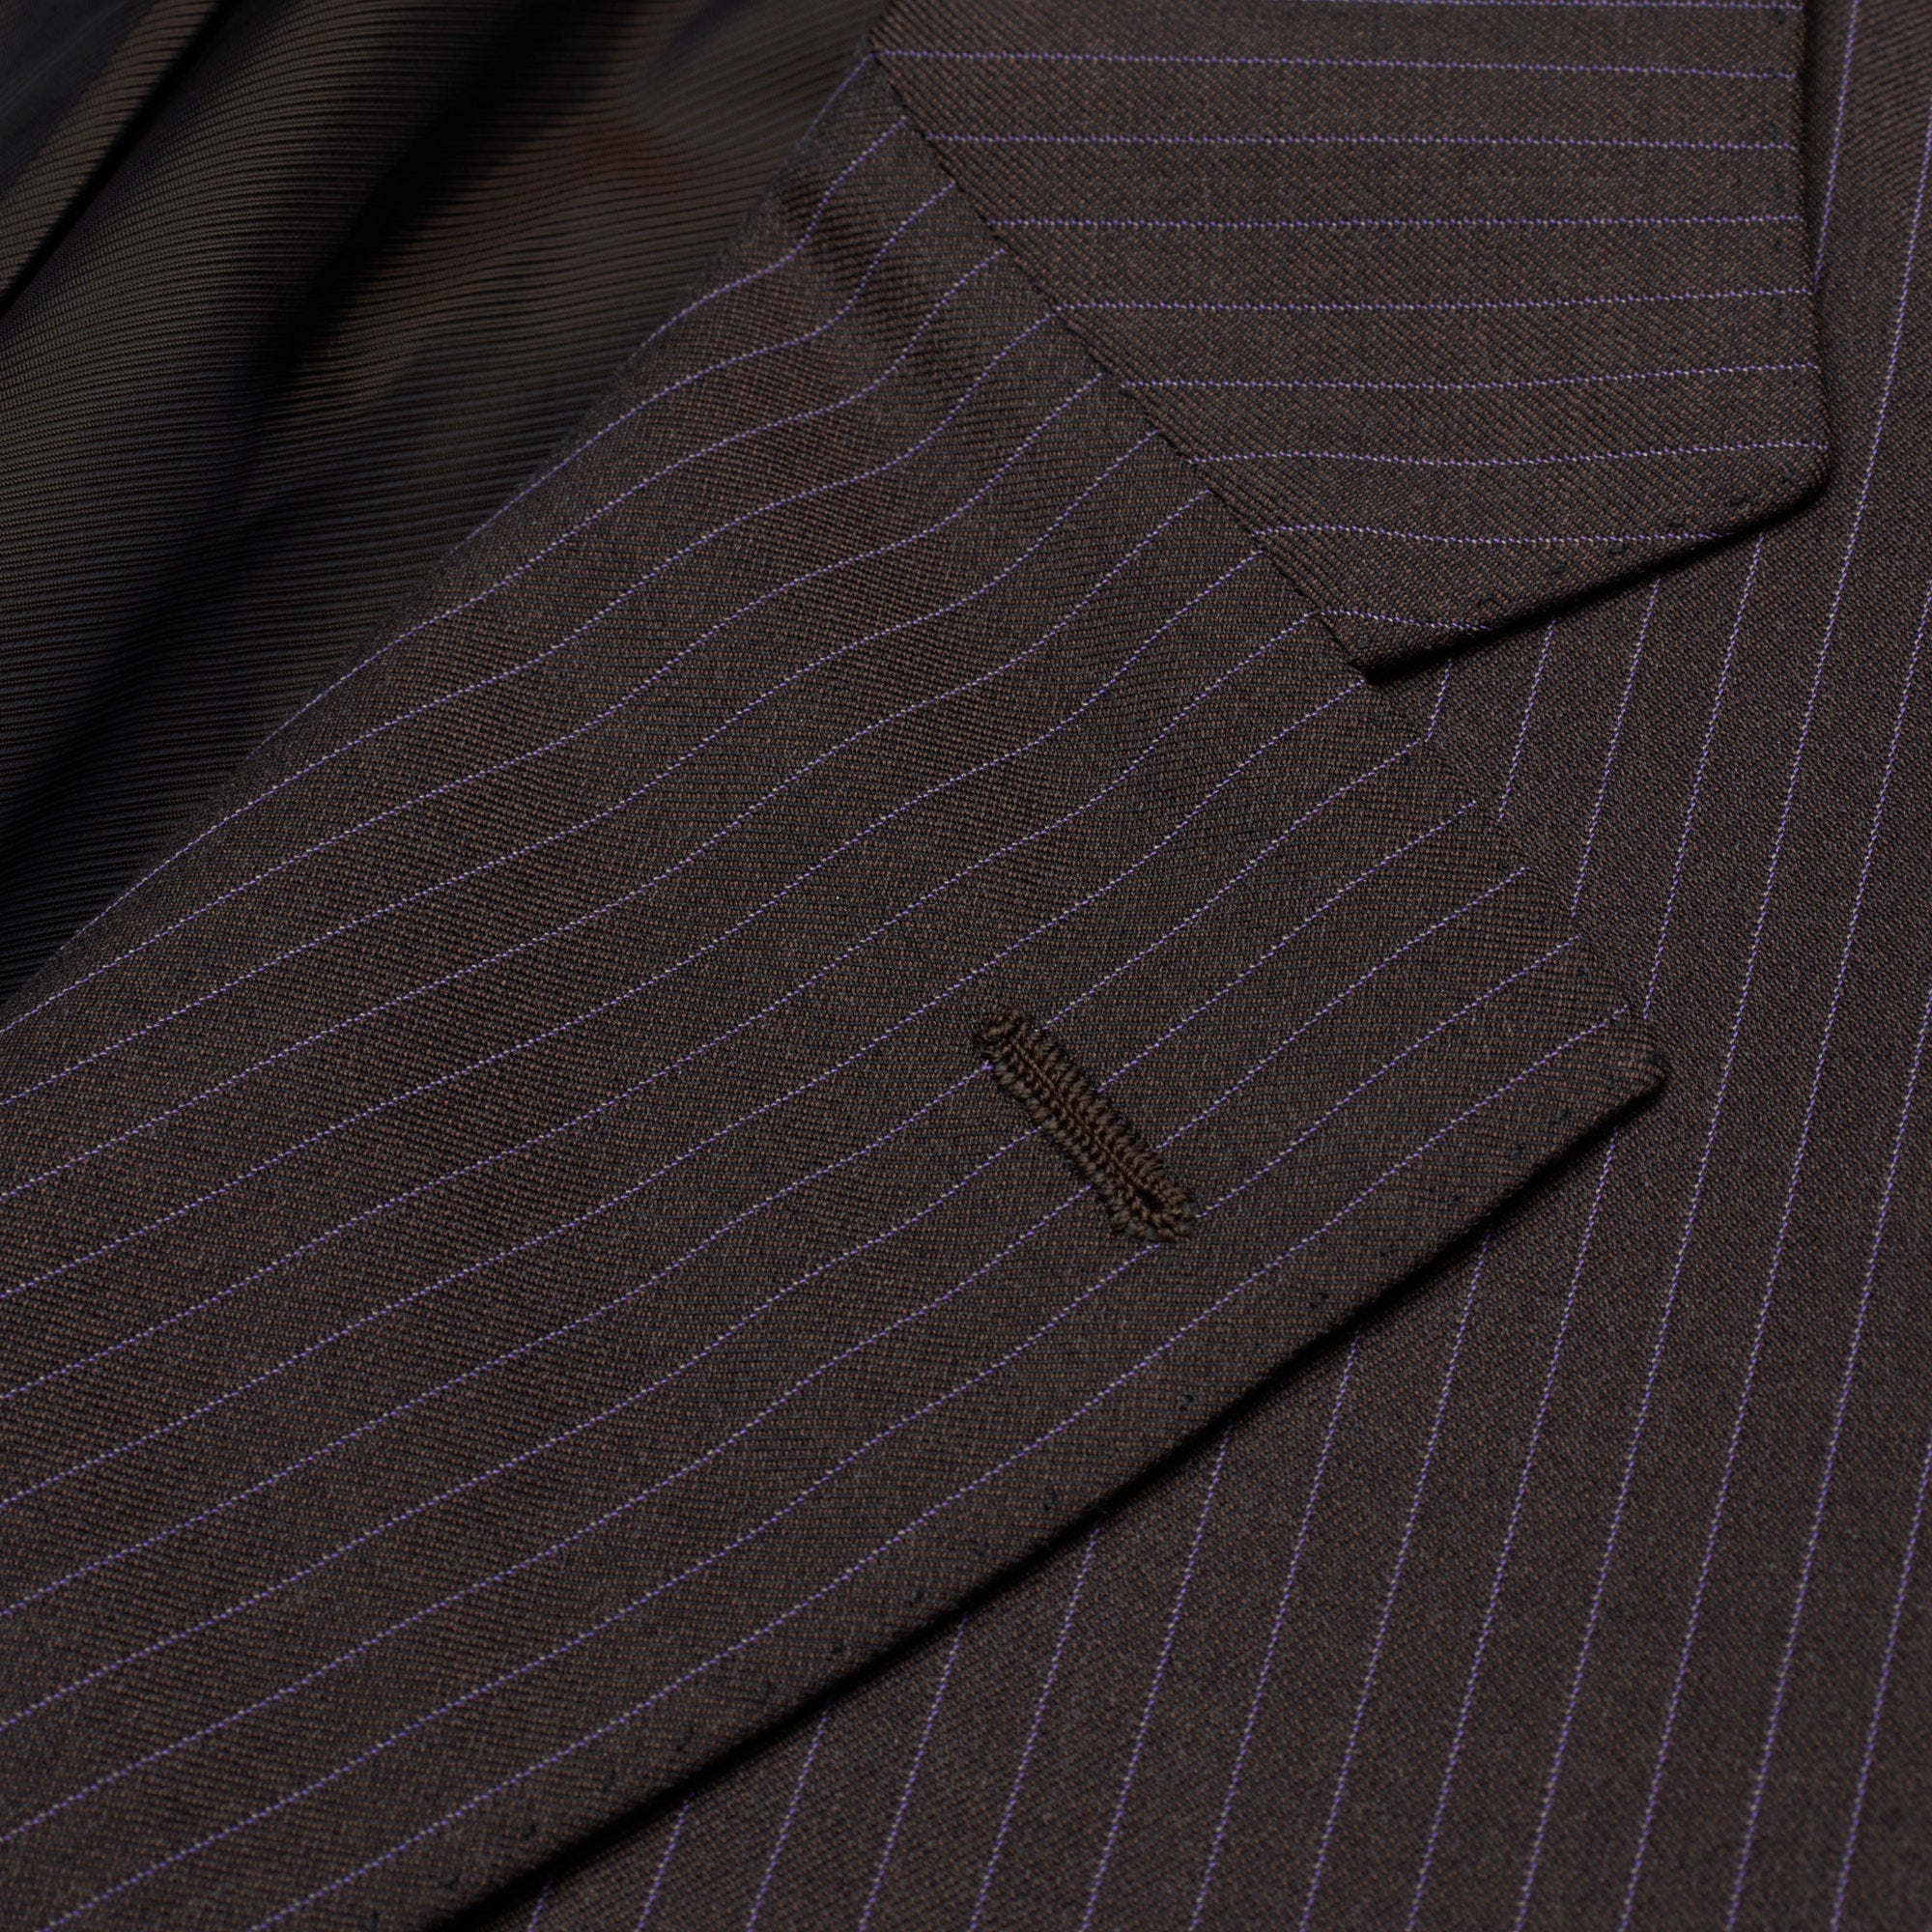 CESARE ATTOLINI Napoli Handmade Brown Striped Wool Super 140's Suit EU 52 US 42 CESARE ATTOLINI